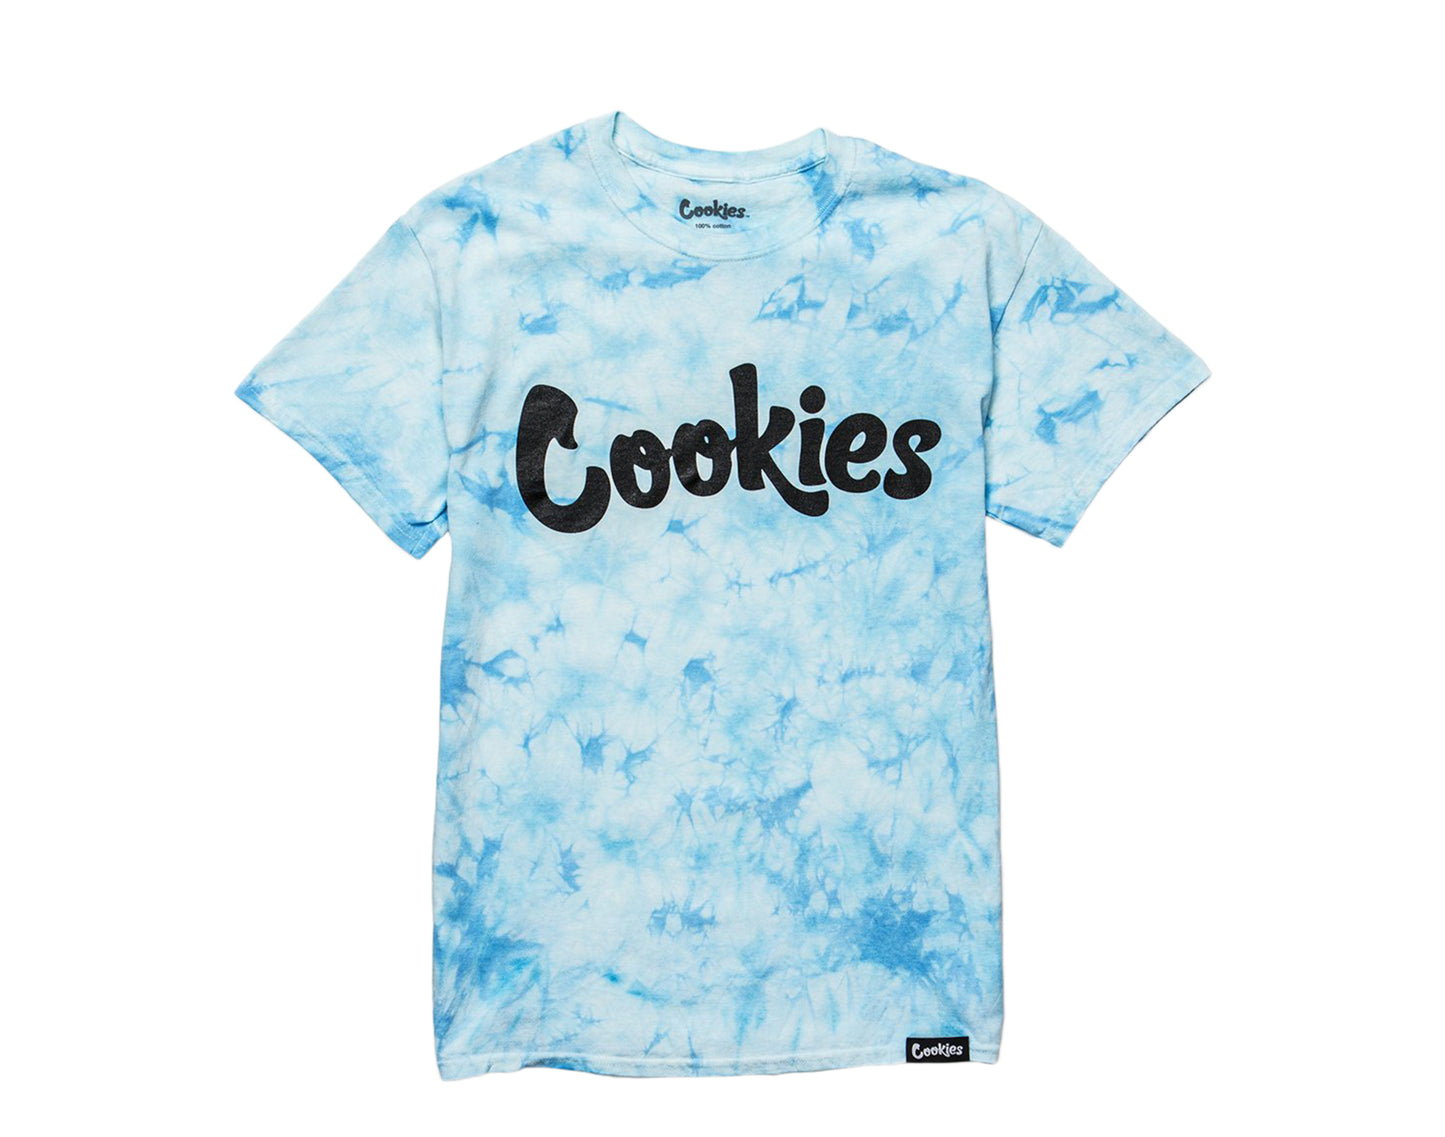 Cookies Original Logo Crystal Wash Tie Dye Carolina Blue T-Shirt 1544T4197-CAR